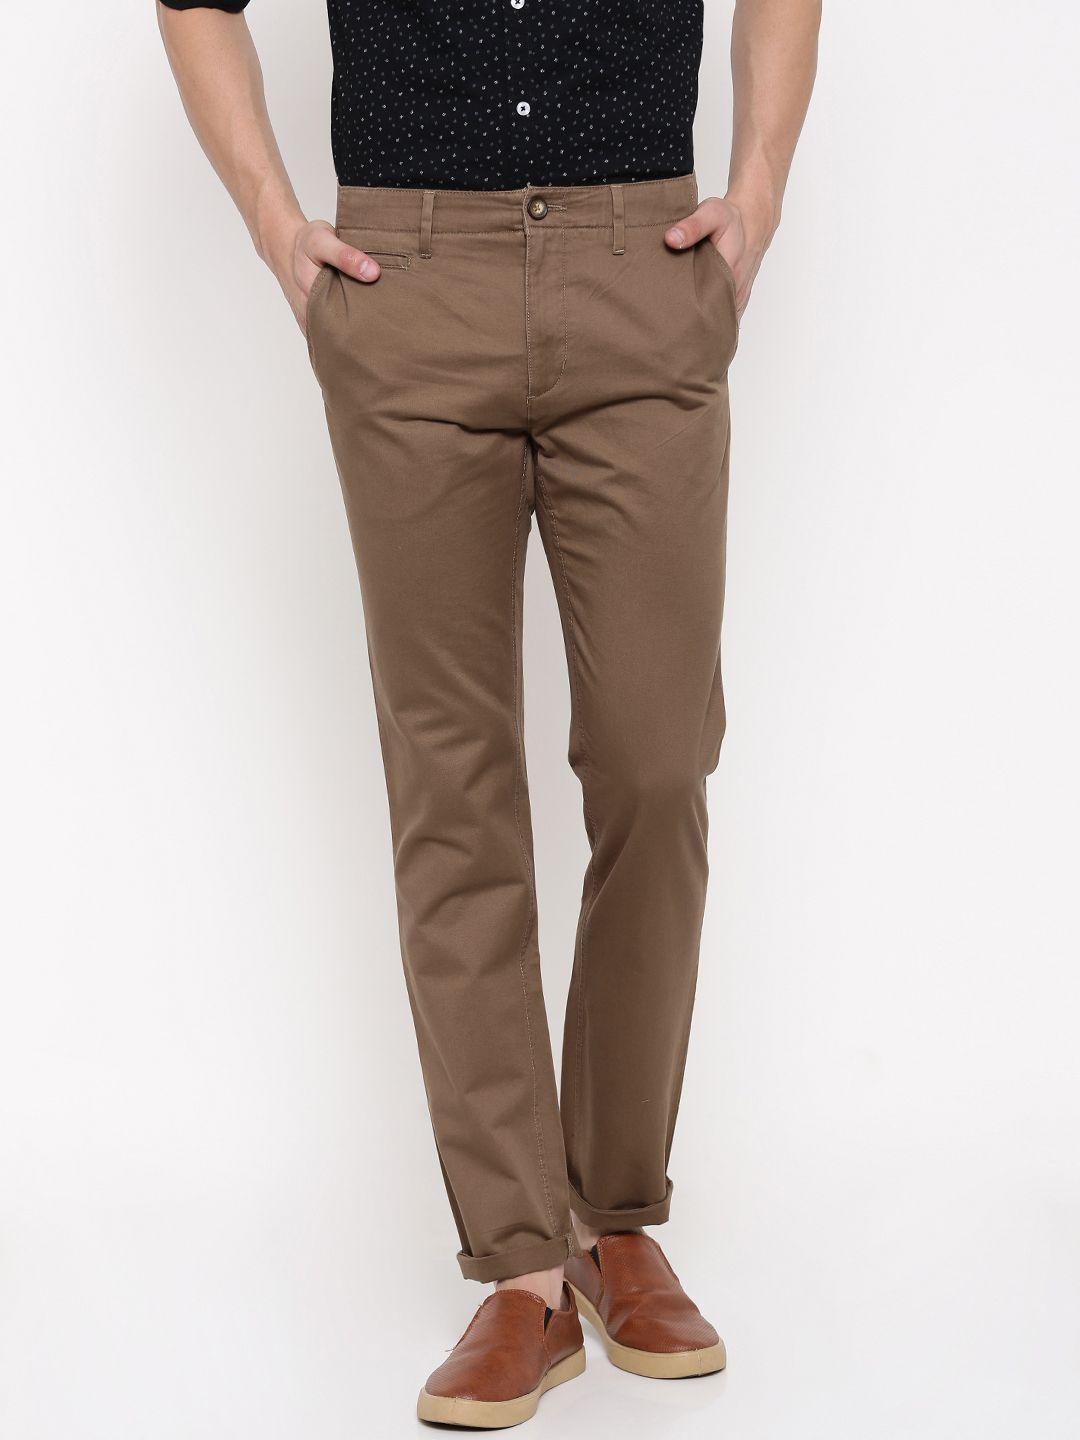 u.s. polo assn. men brown printed chino trouser